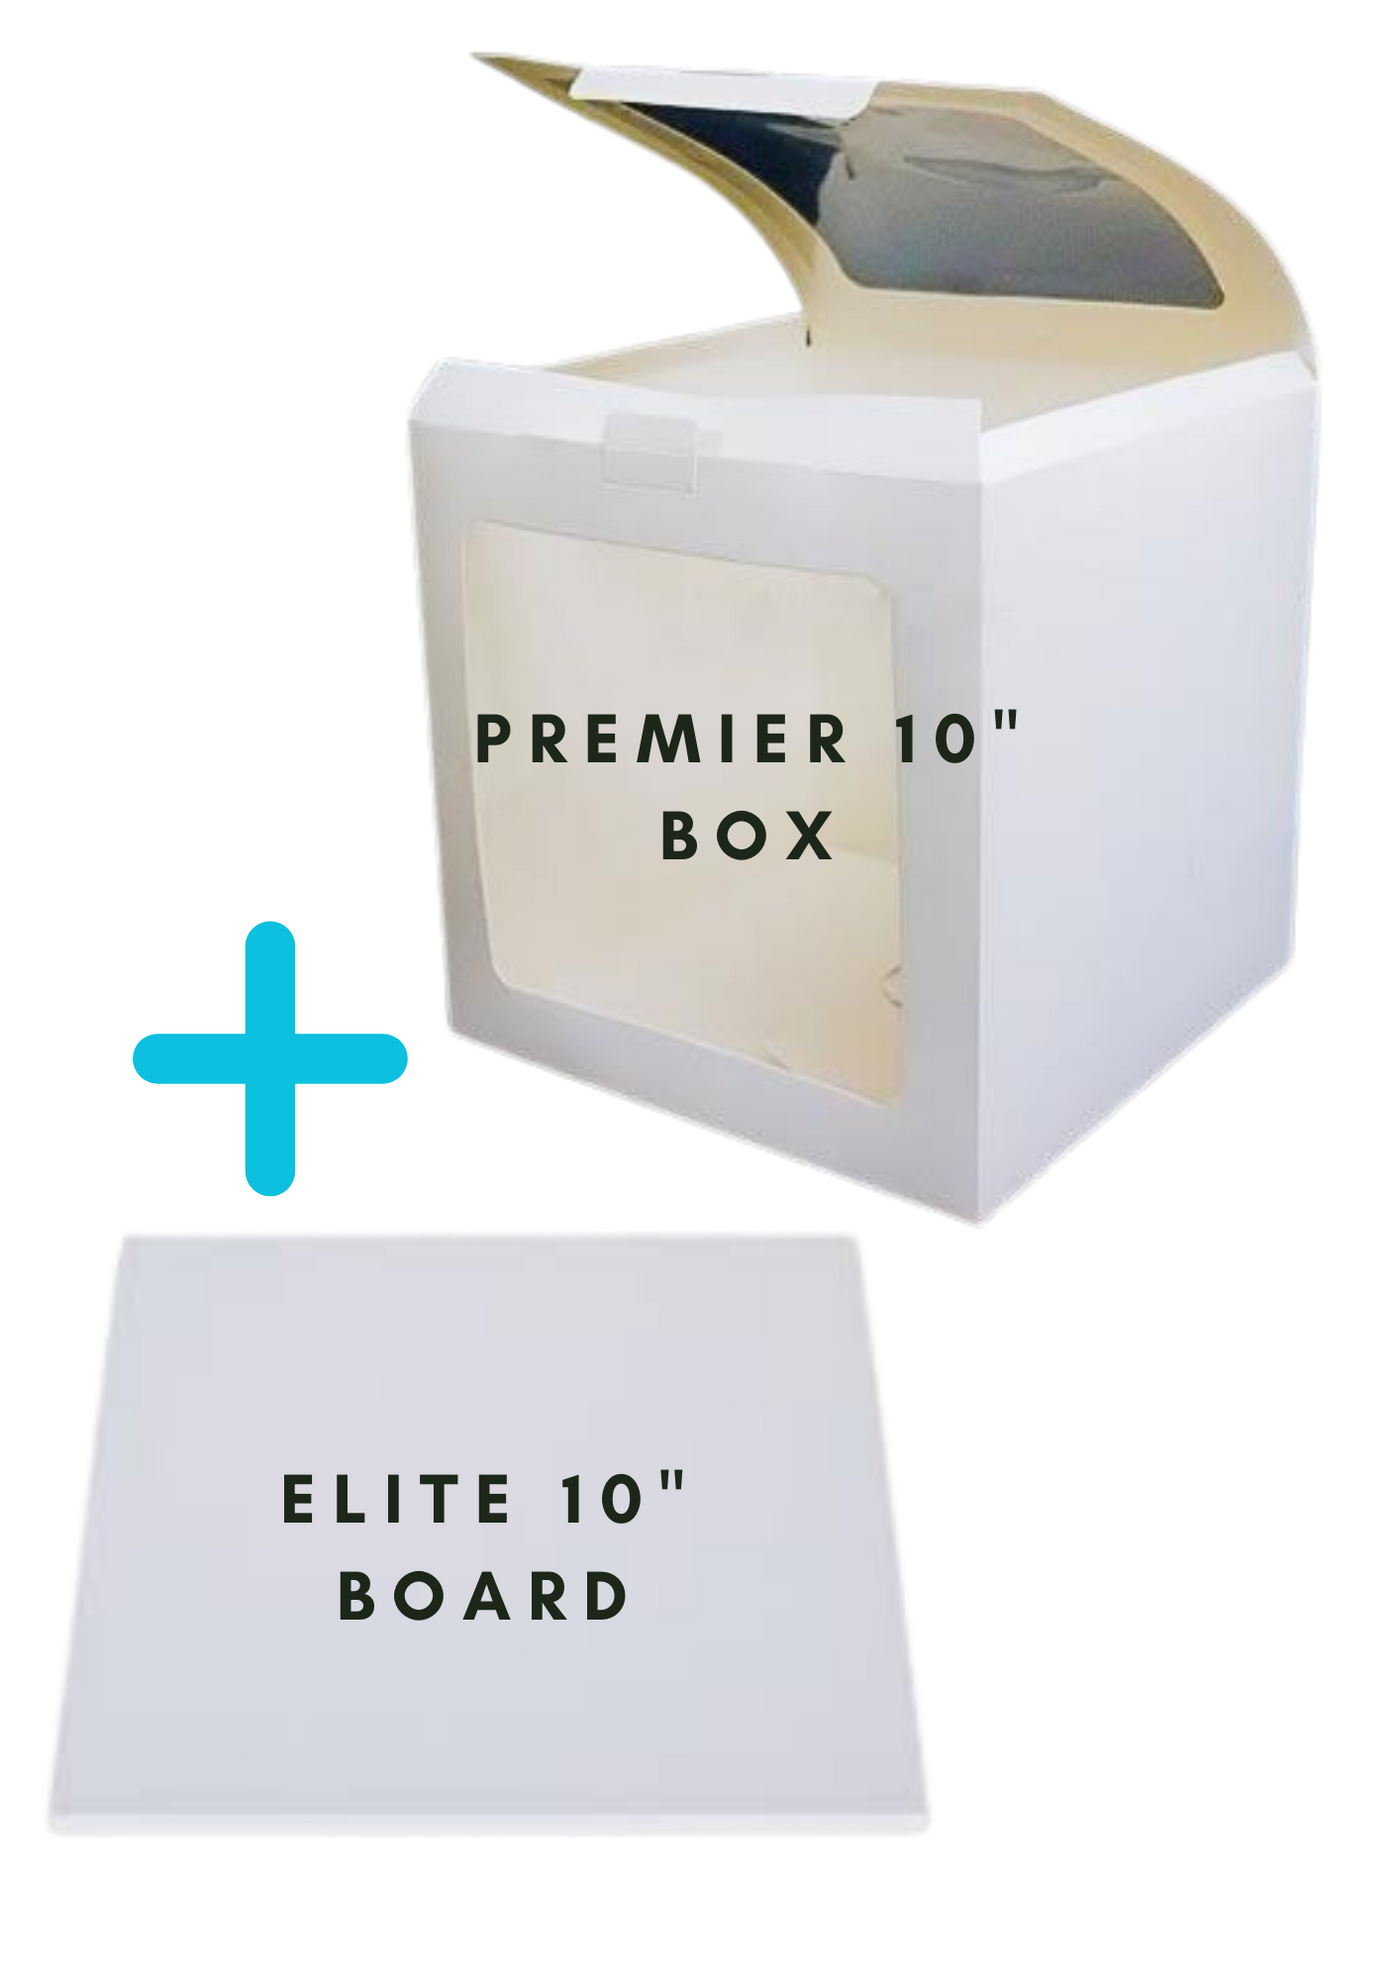 Premier 10"  Window Box + Elite 10" Board combo